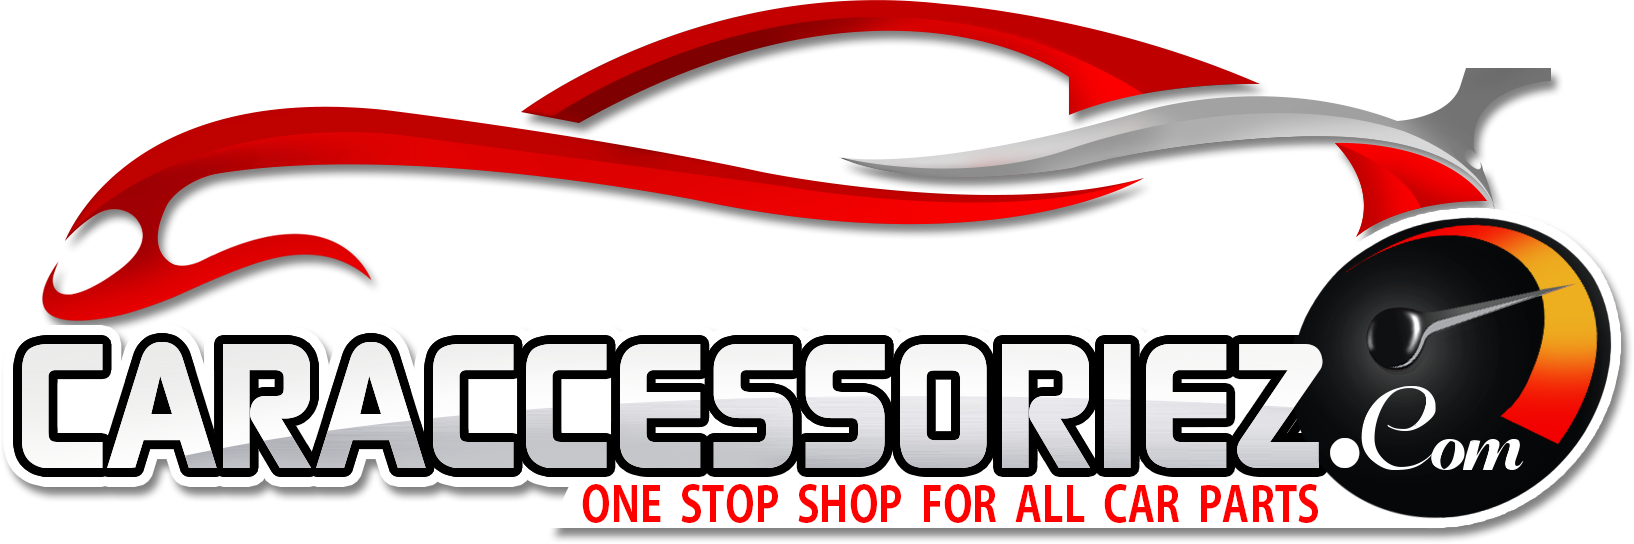 Car Accessories Pakistan - Car Accessories Shop Logo (1634x544), Png Download